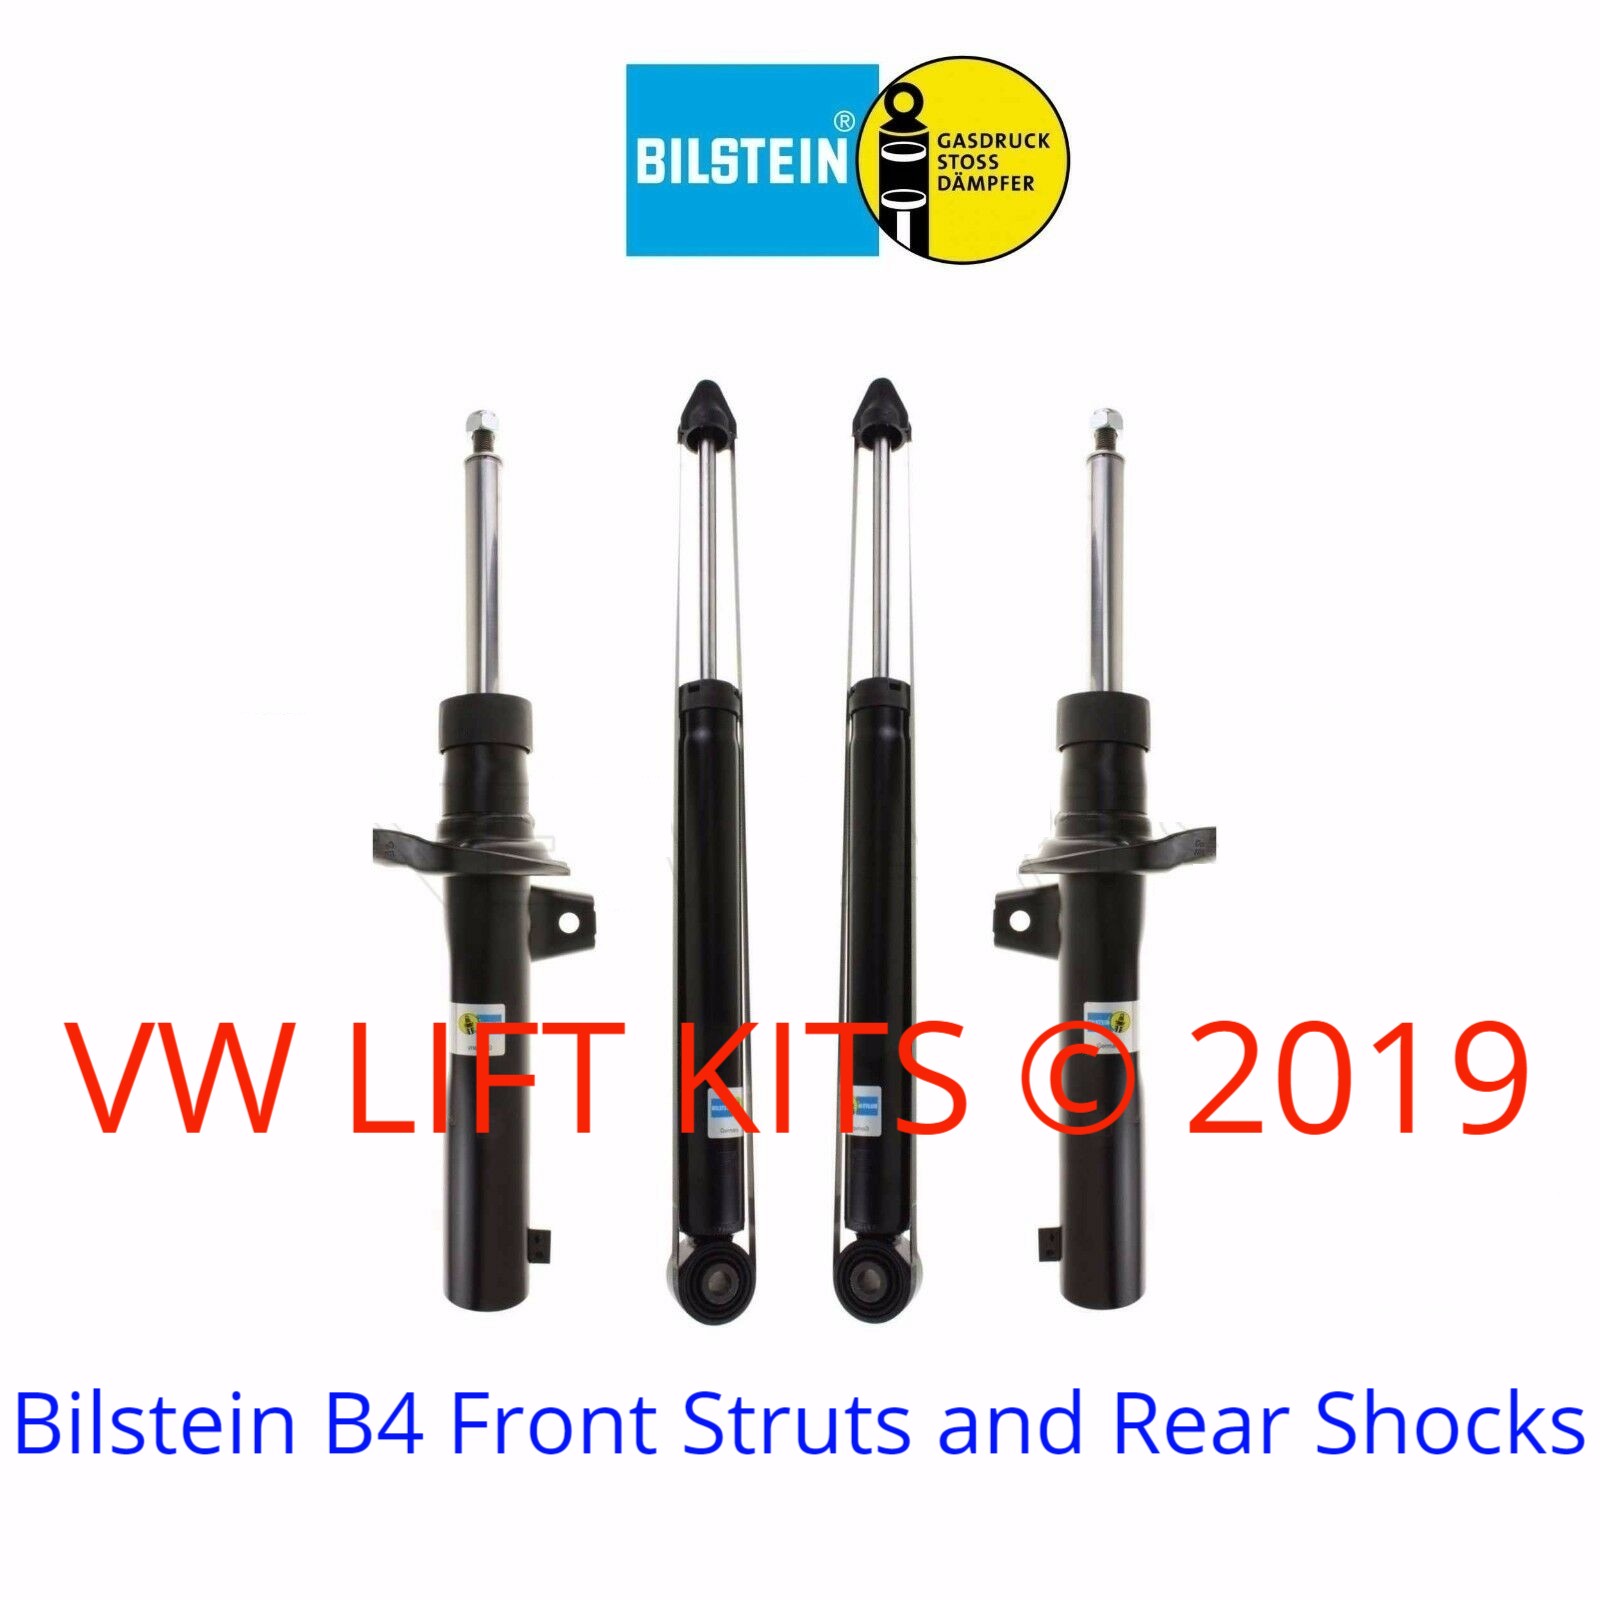 Firmer Bilstein Front Struts and Rear Shocks for MK5 VW Beetle A5 2011-2019